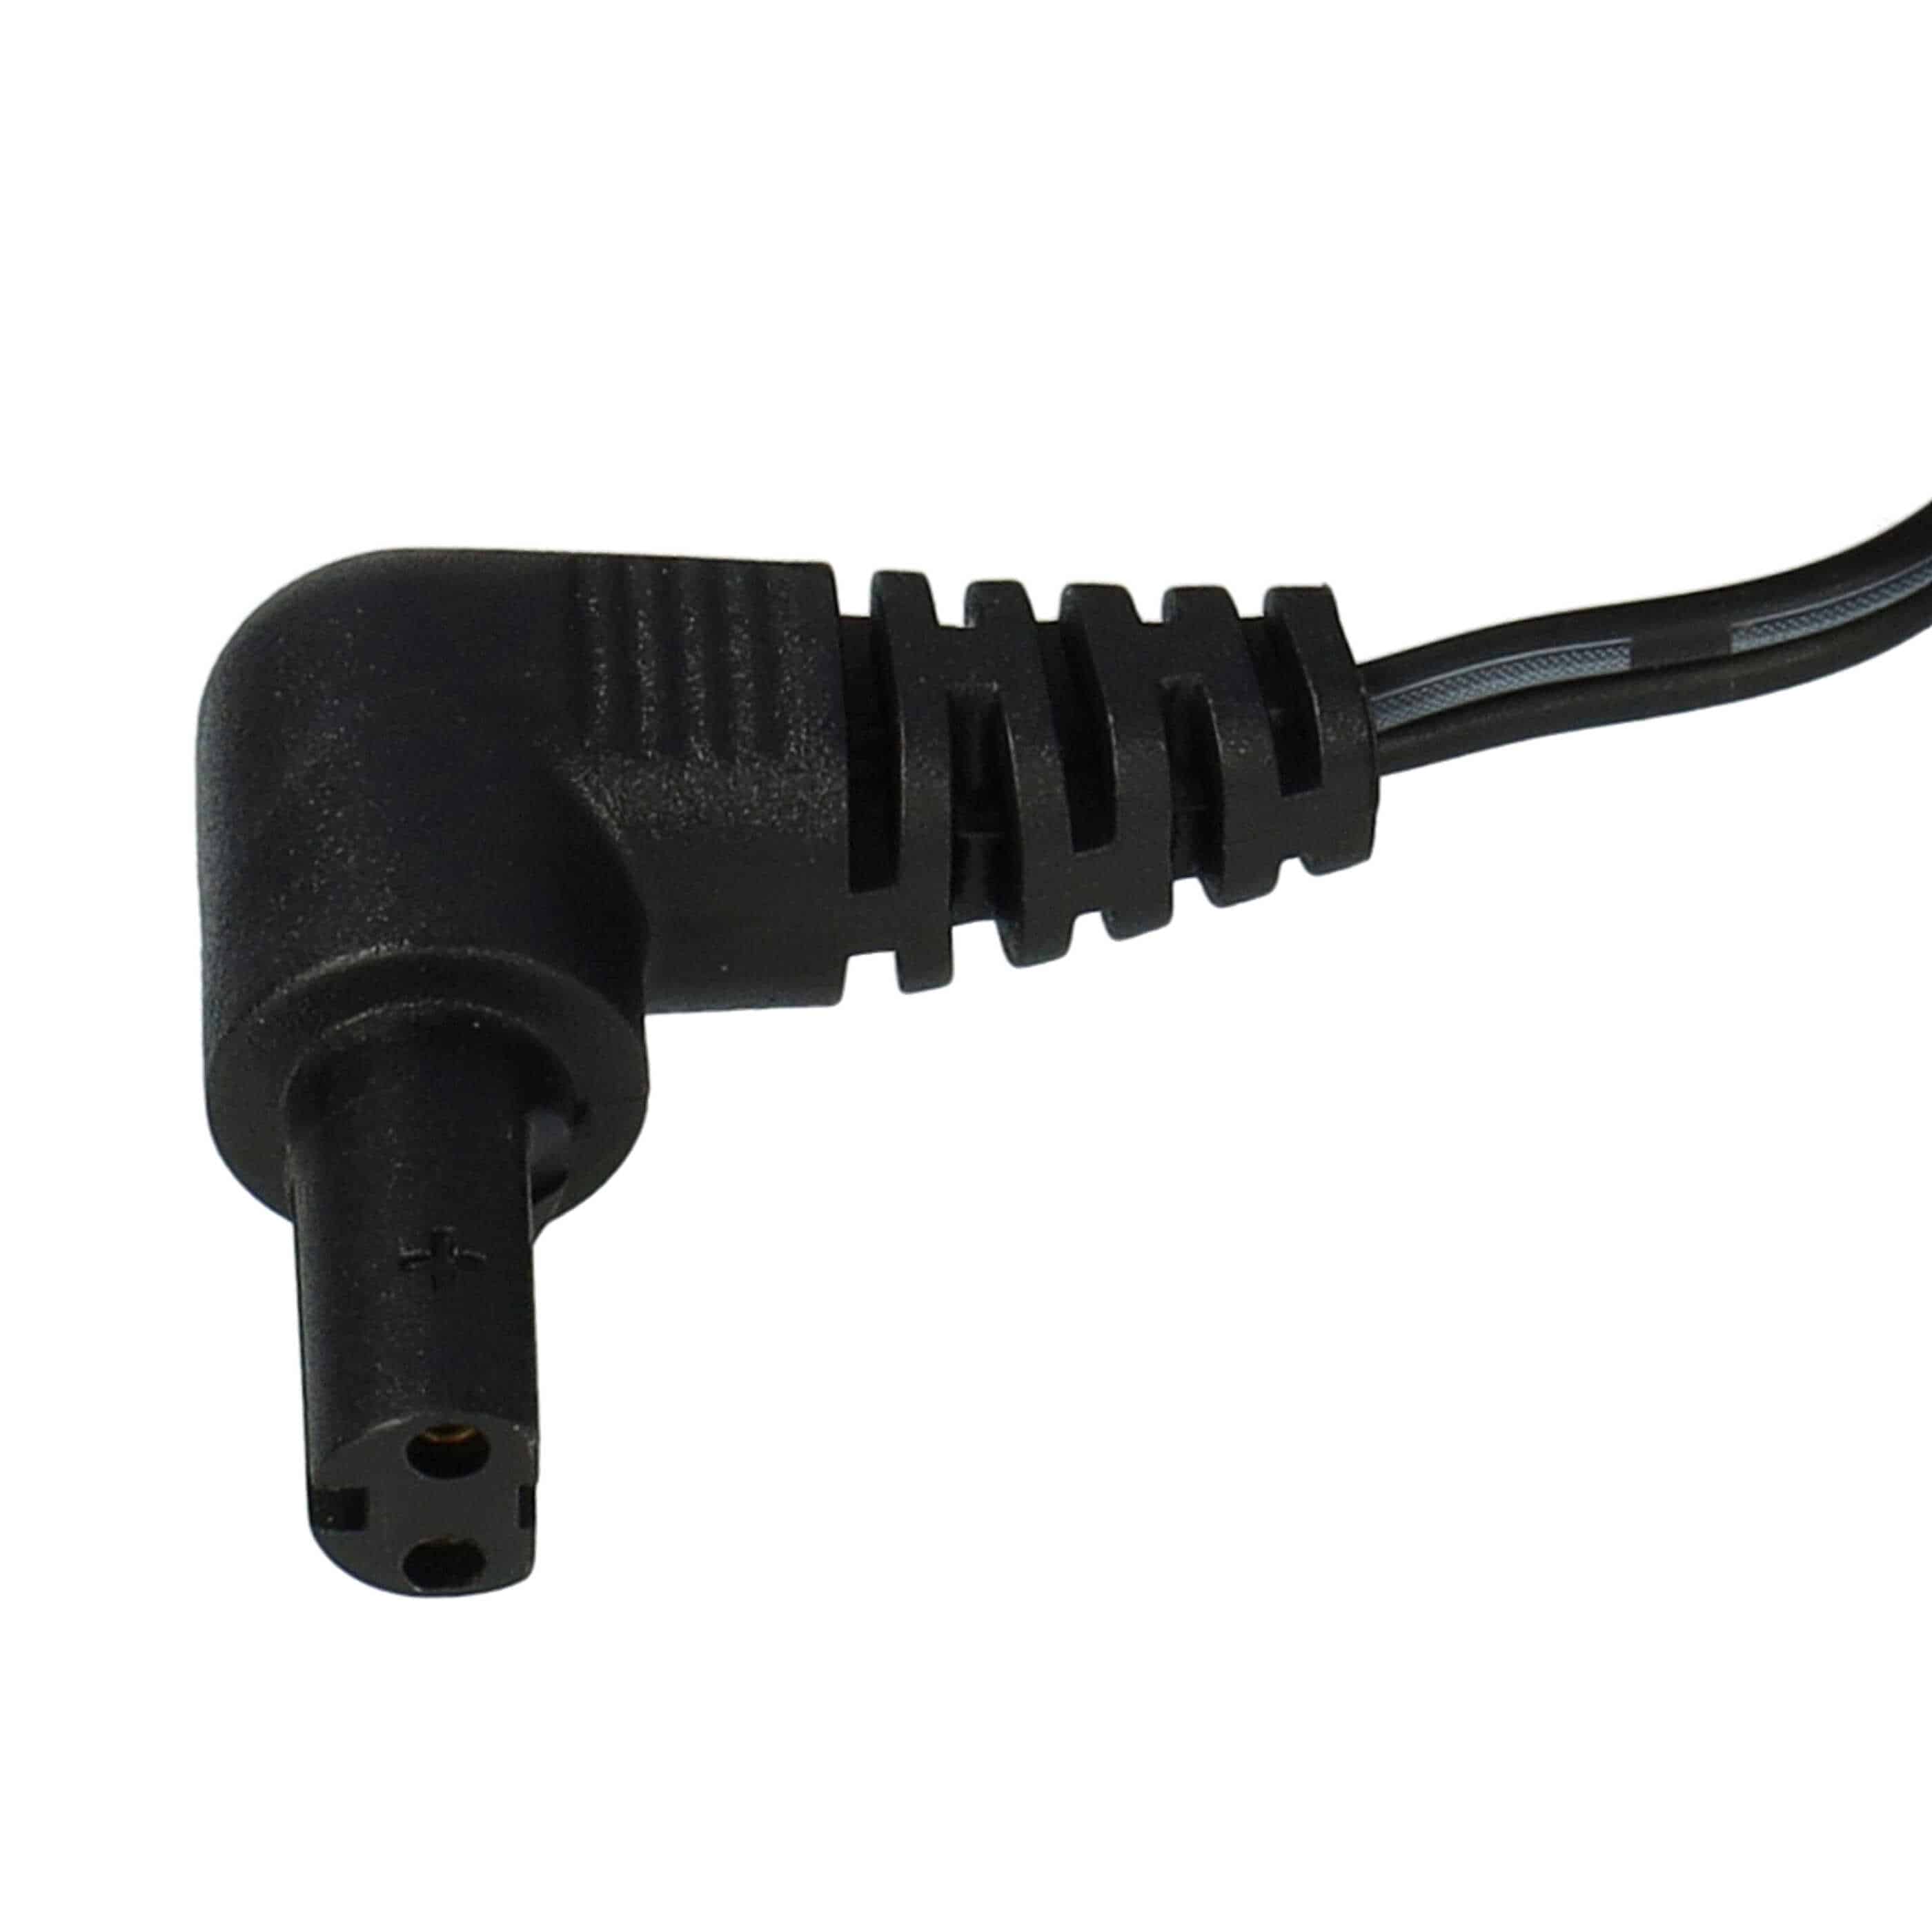 Mains Power Adapter replaces Black & Decker 90509988 for Black & Decker Power Tool - 200 cm